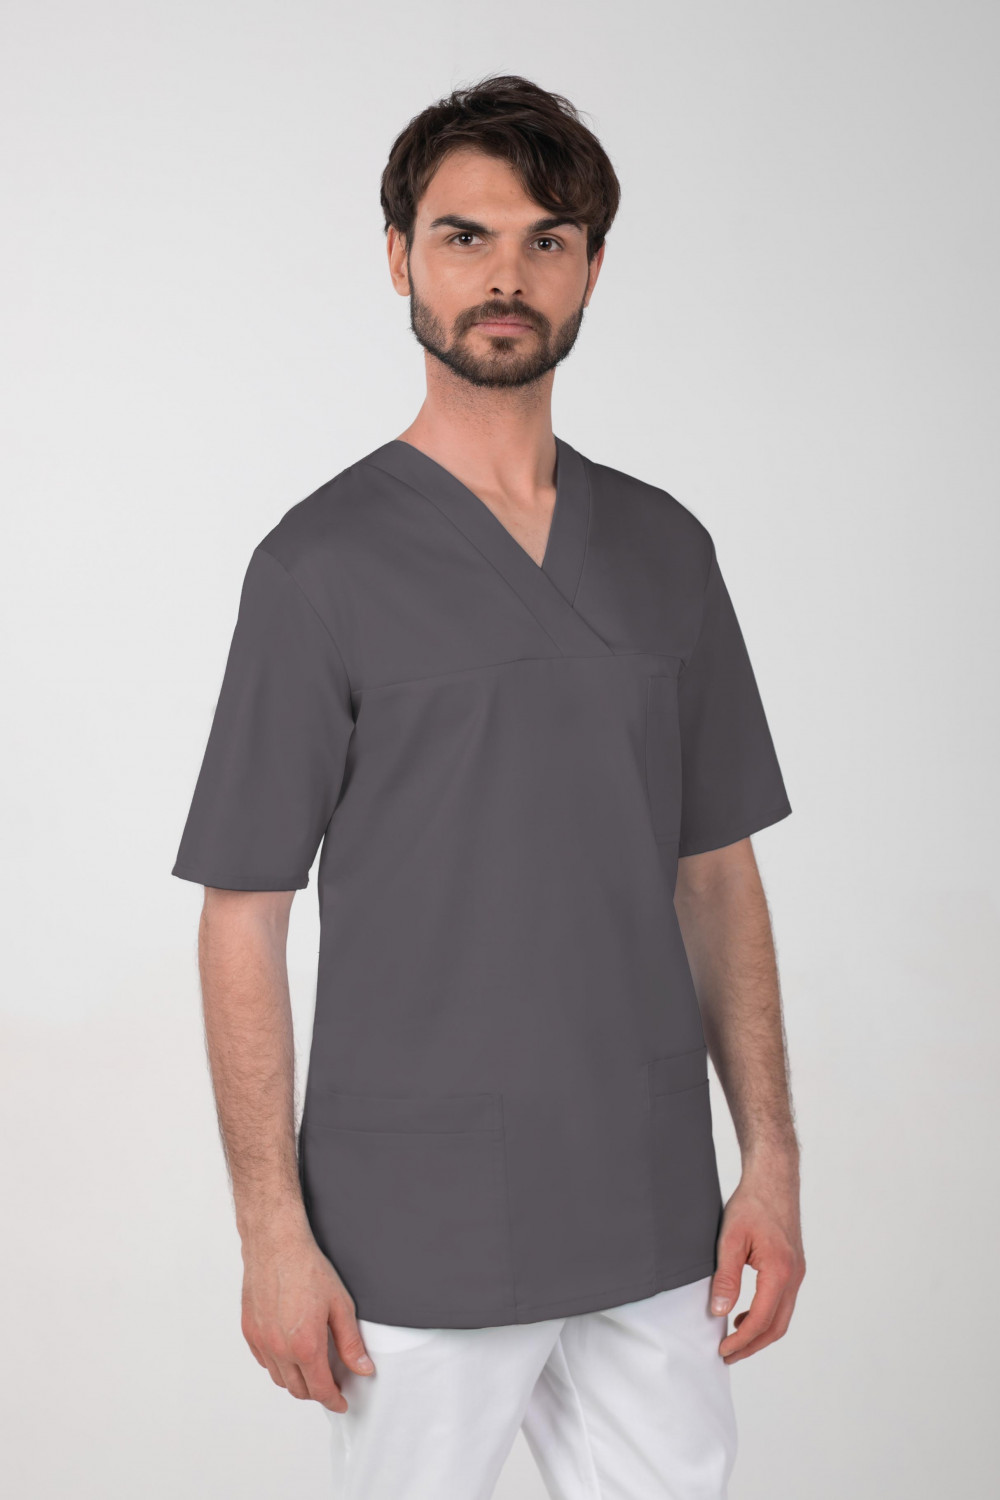 M-074CX Elastyczna bluza medyczna męska chirurgiczna grafit